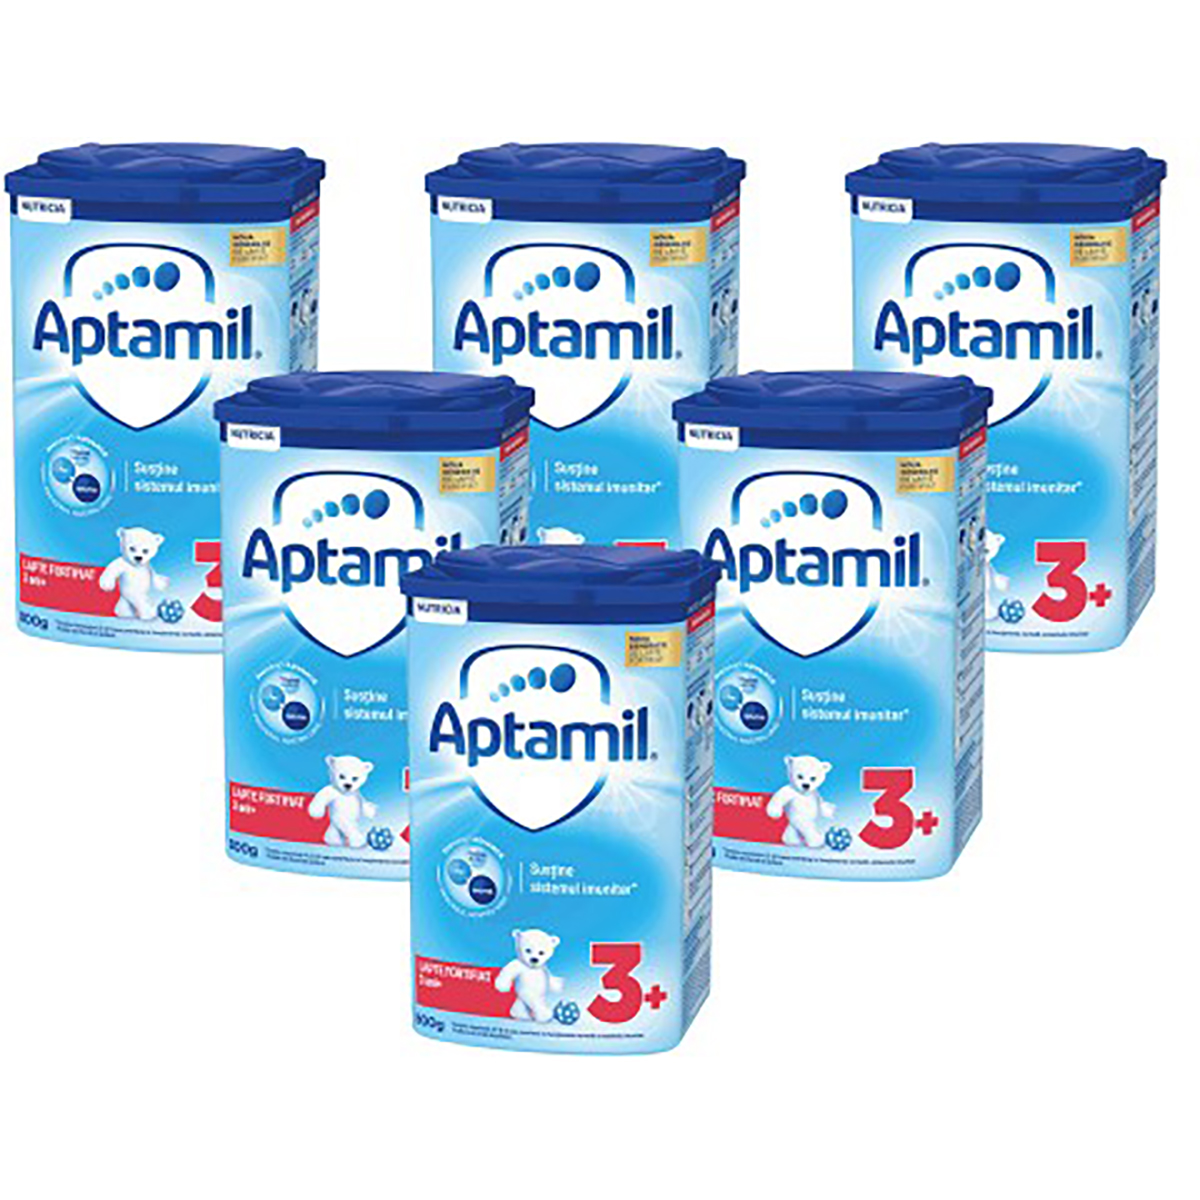 Lapte praf Aptamil Junior 3+, 6 pachete x 800 g Aptamil